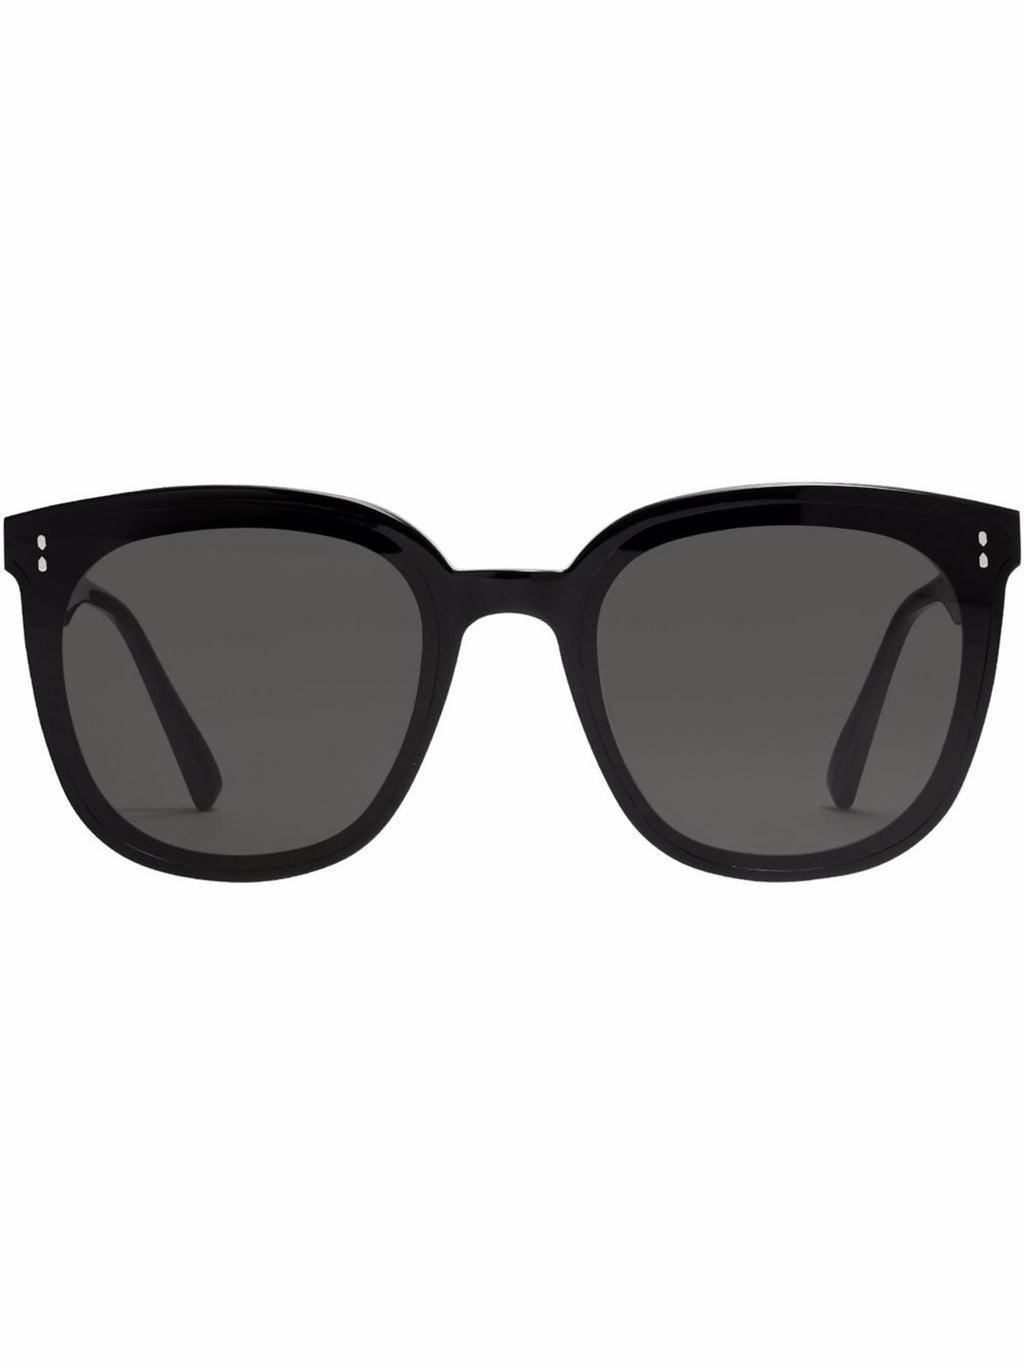 GENTLE MONSTER ROSY-01 Sunglasses